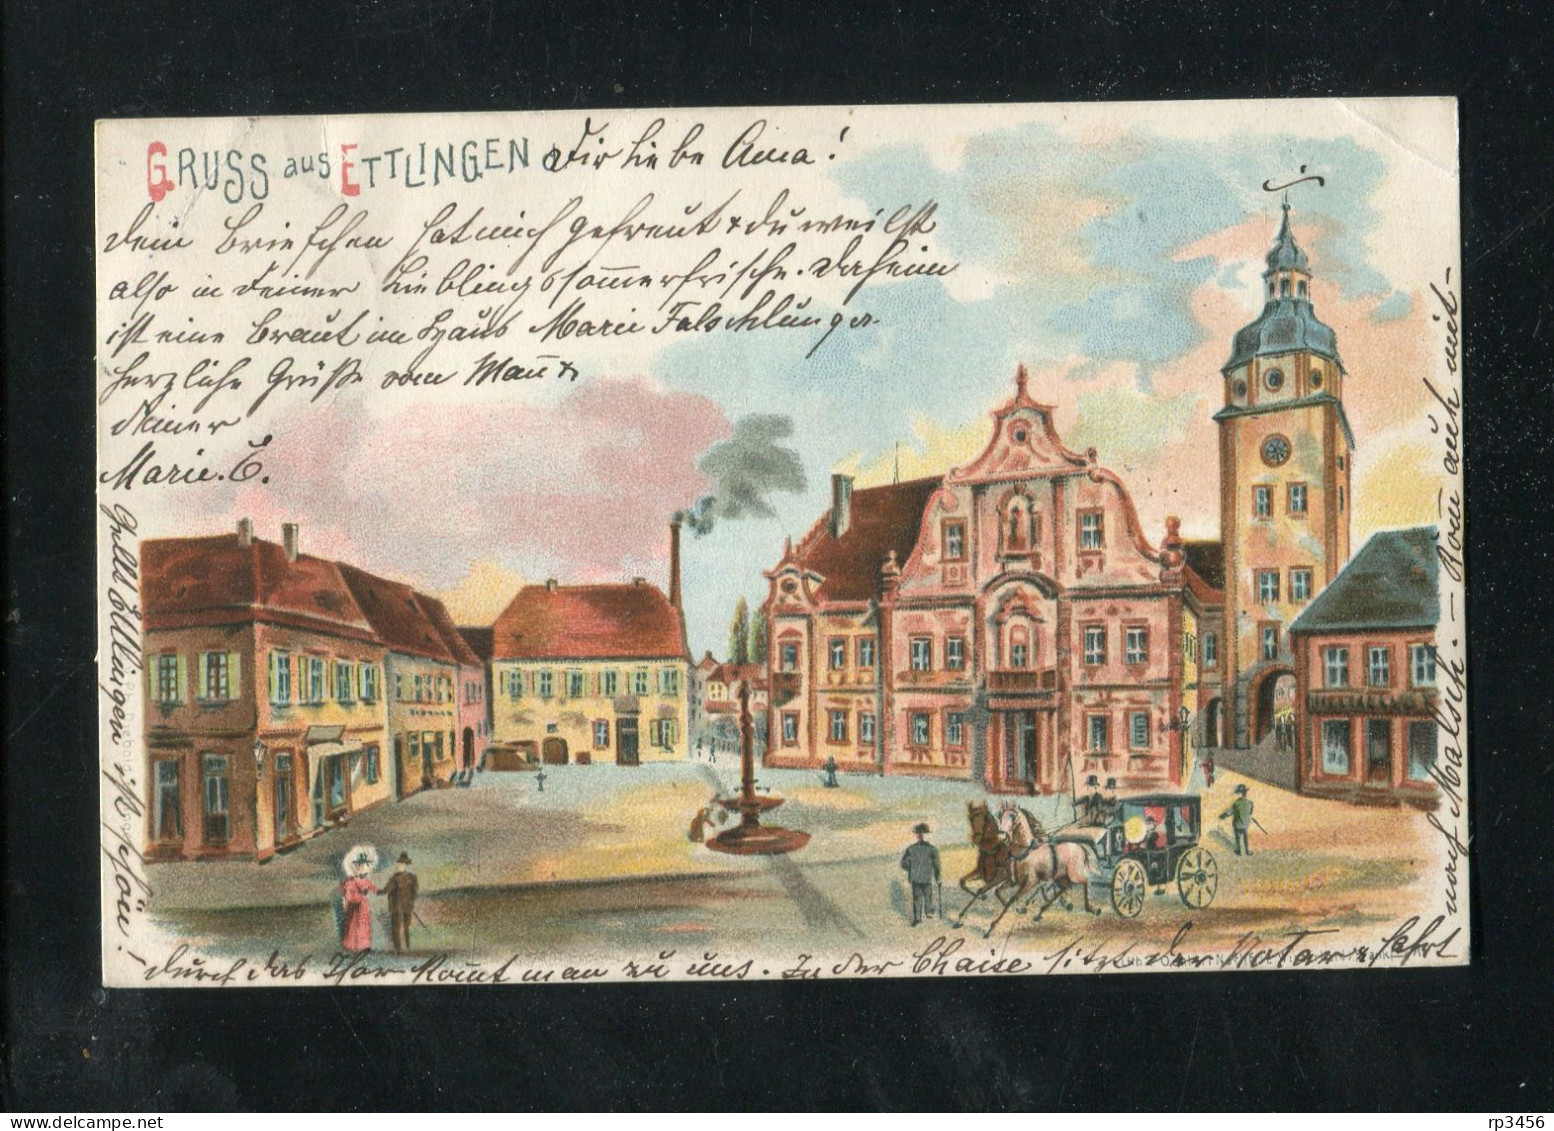 "GRUSS AUS ETTLINGEN" 1900, Fruehe Color-AK (Litho), Sehr Gute Erhaltung (C190) - Ettlingen